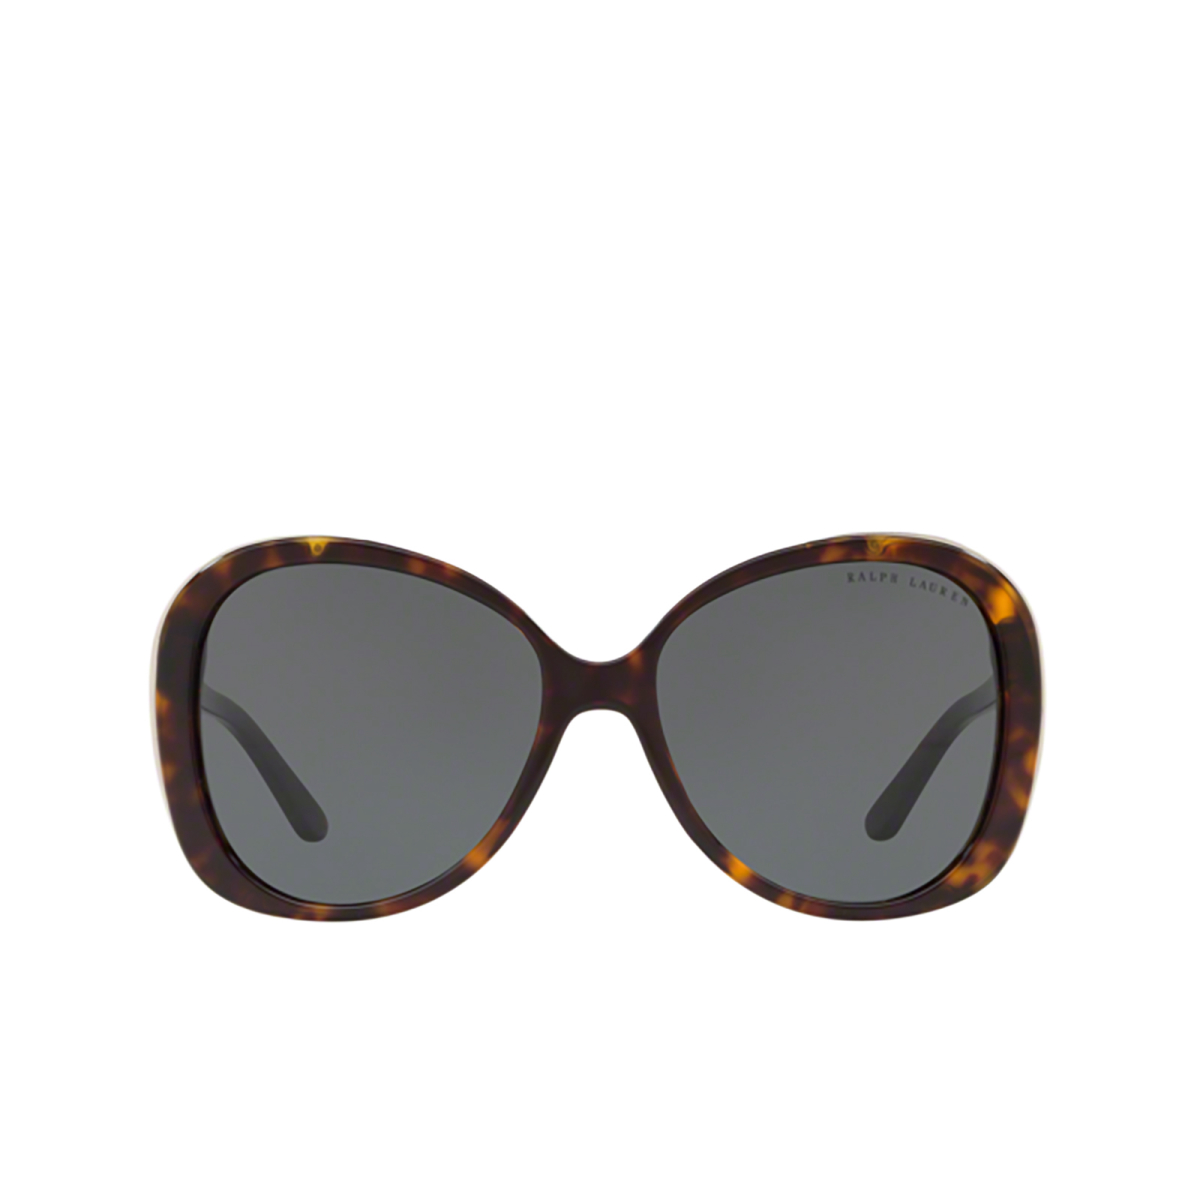 Ralph Lauren® Butterfly Sunglasses: RL8166 color Shiny Dark Havana 500387 - front view.